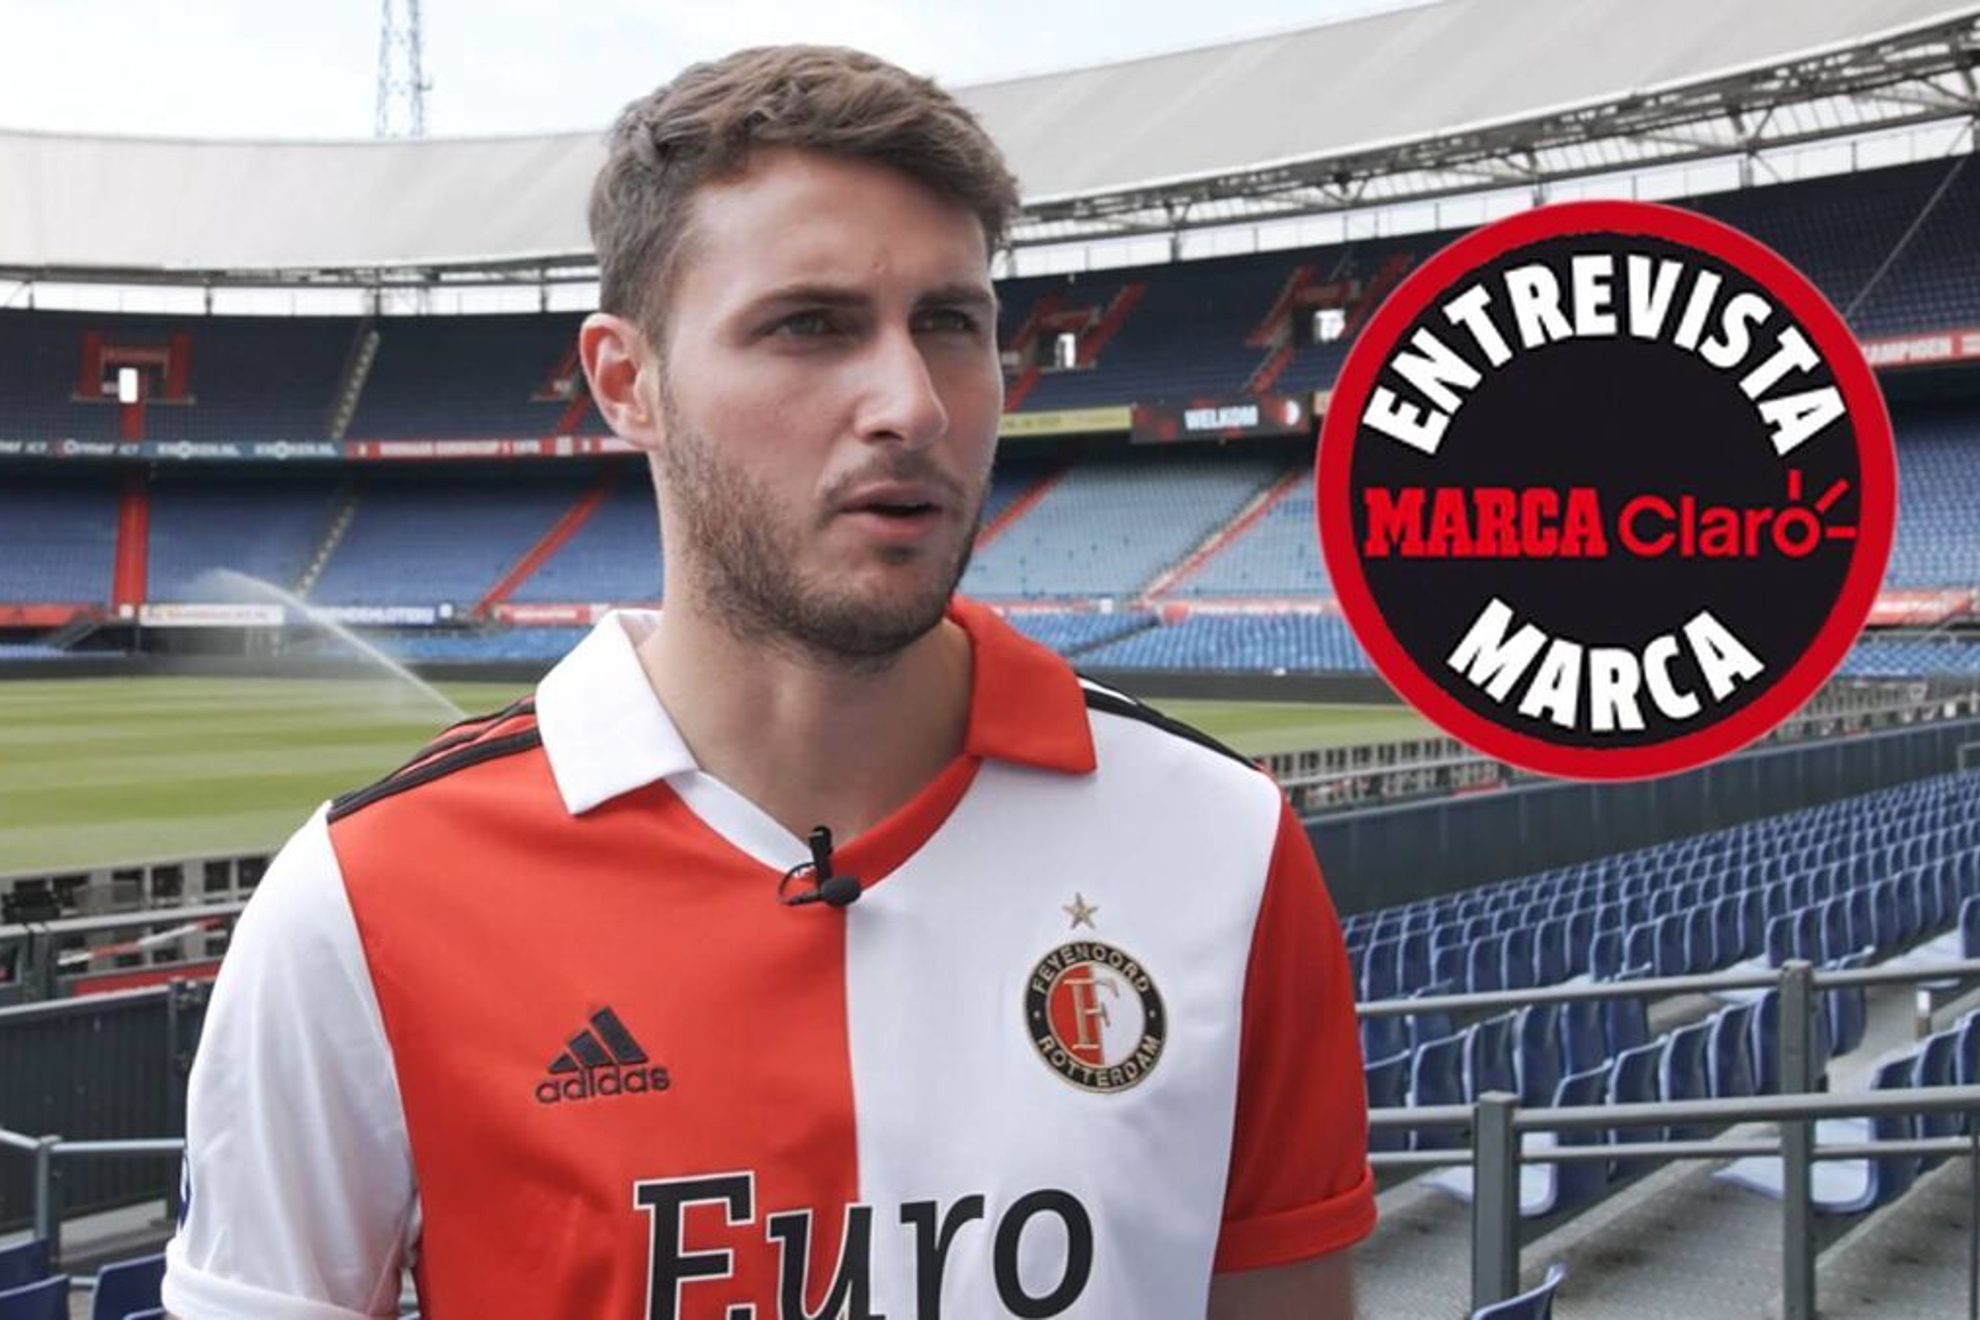 Santiago Gimnez: "Espero poder celebrar muchos goles con el Feyenoord"